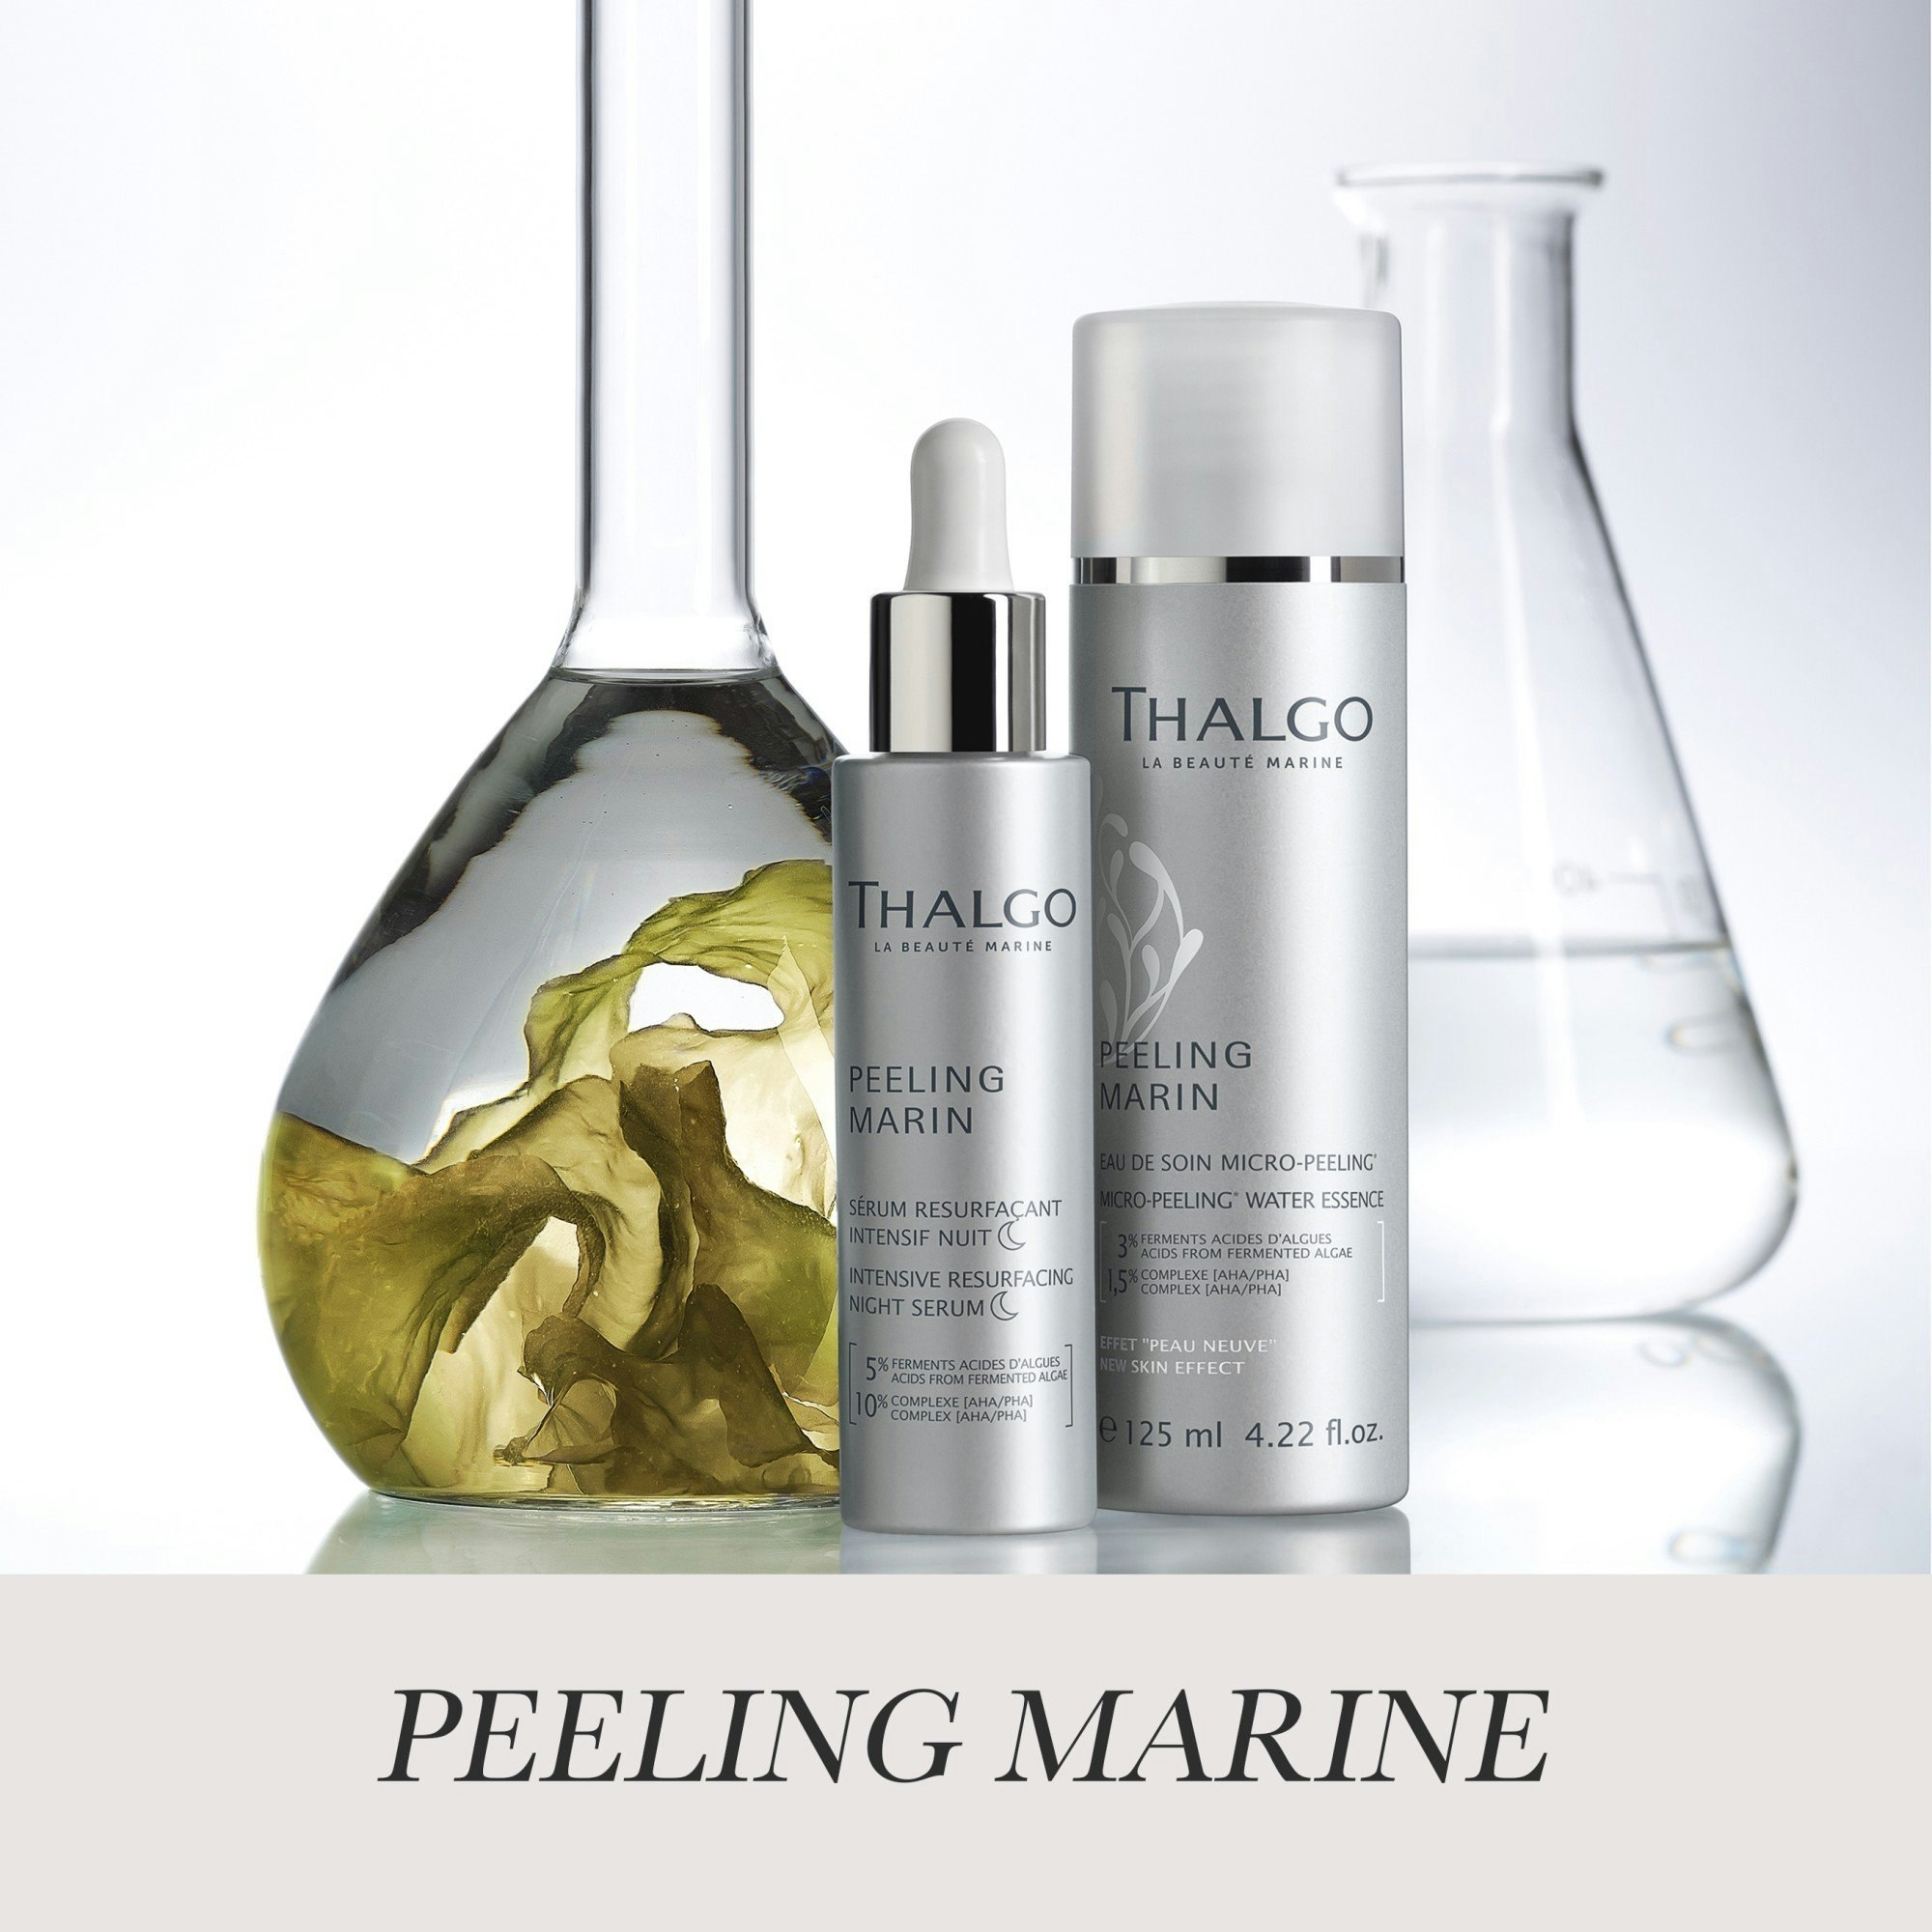 Peeling Marine - LaLuna PRO AS